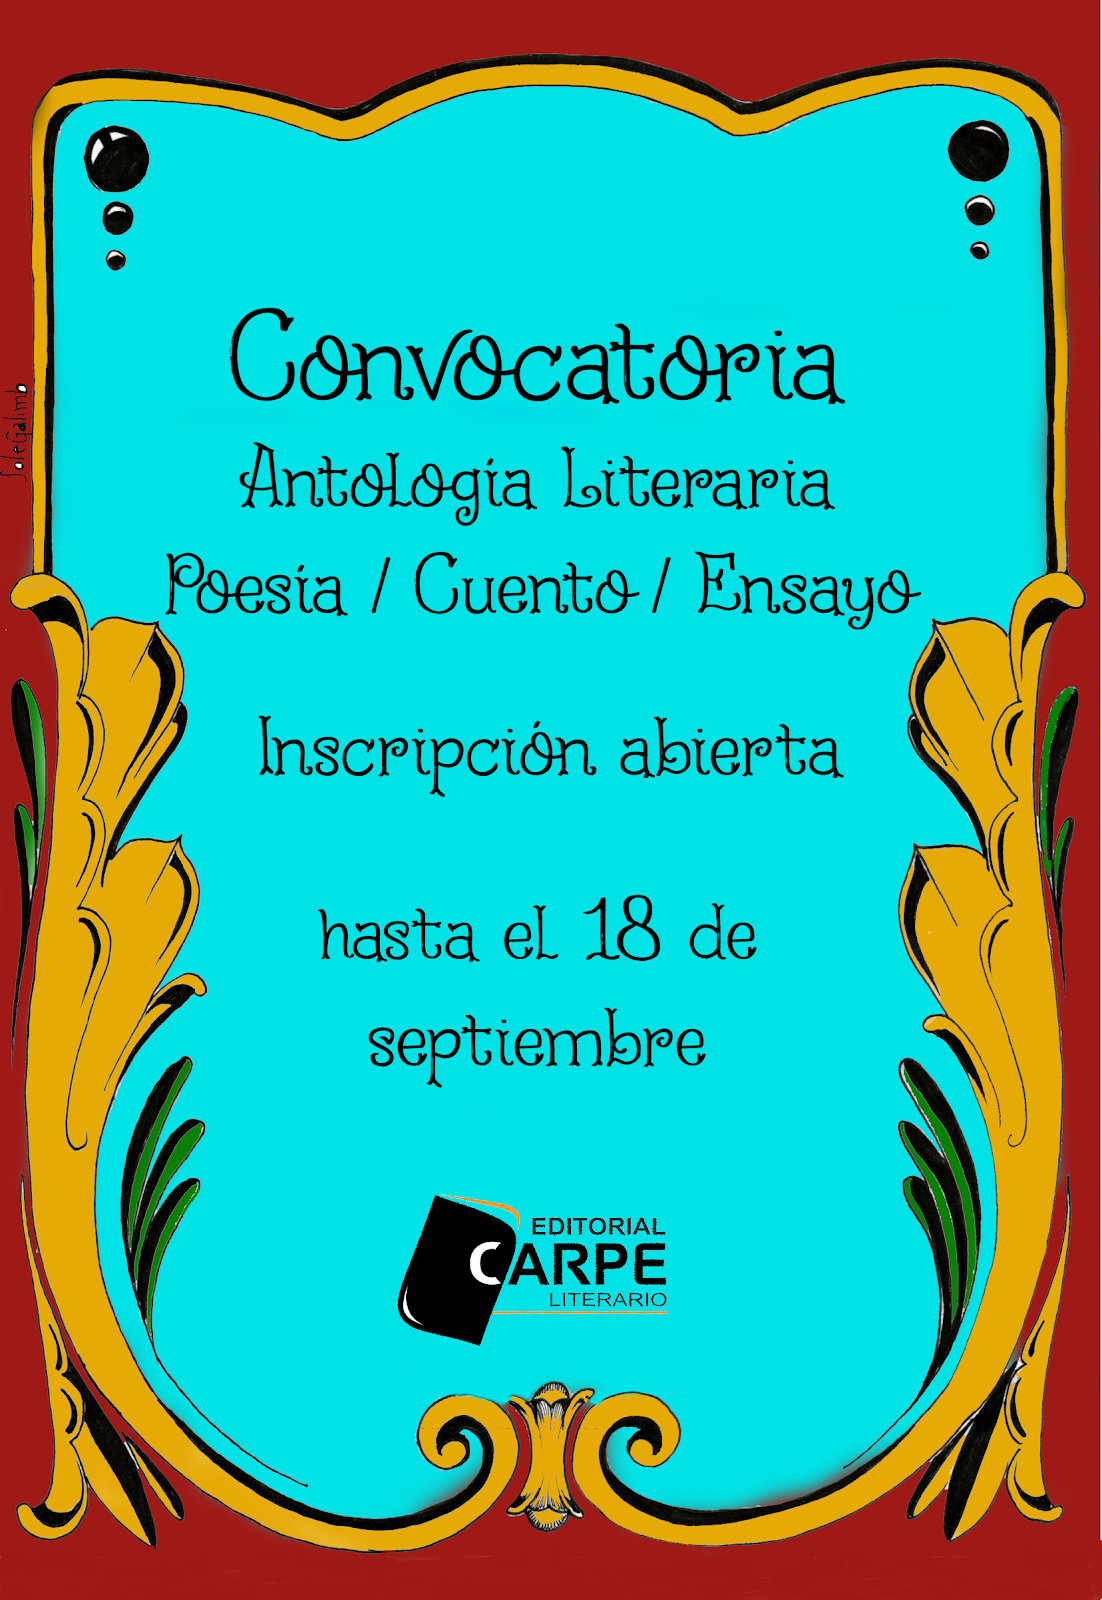 Convocatoria para antología literaria cooperativa 2019